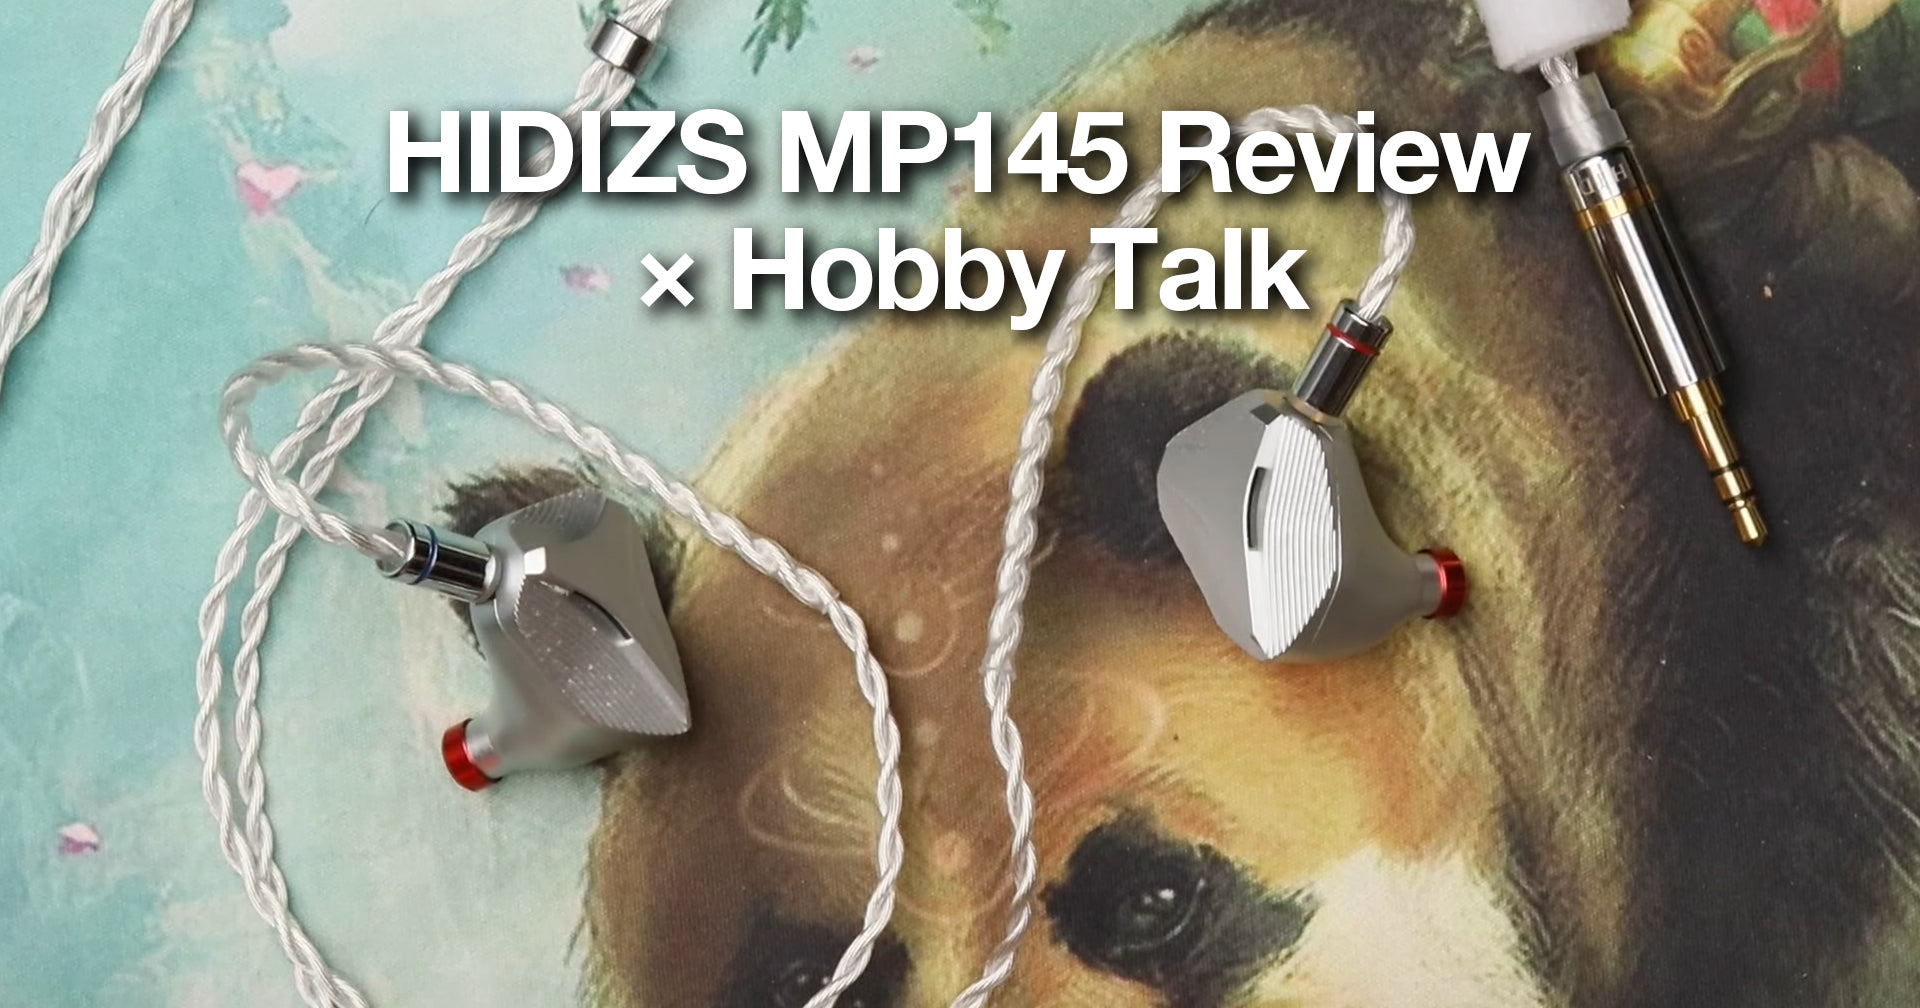 HIDIZS MP145 Review - Hobby Talk